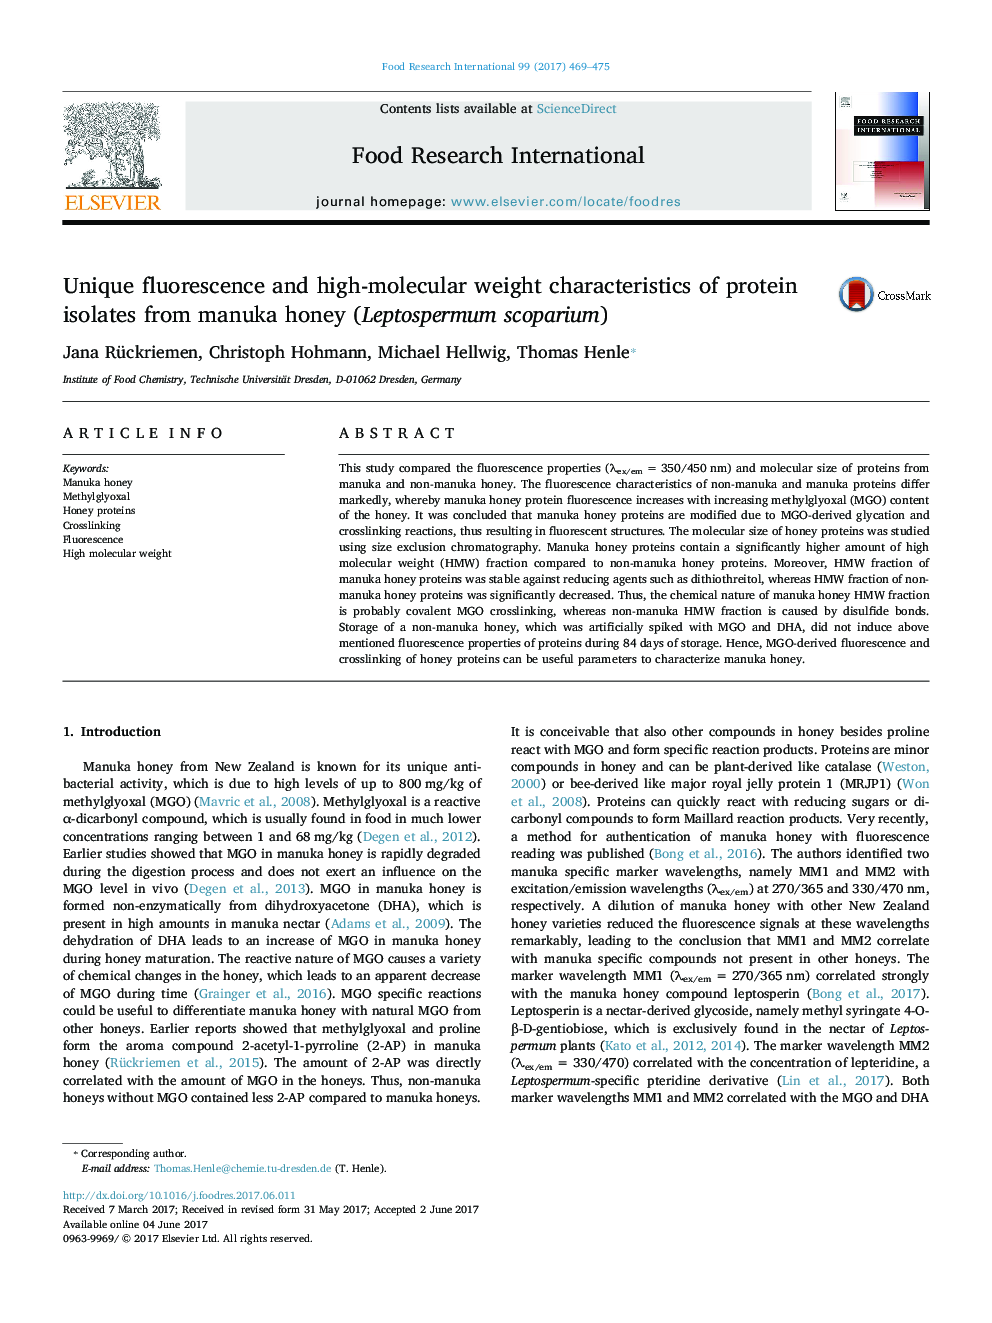 Unique fluorescence and high-molecular weight characteristics of protein isolates from manuka honey (Leptospermum scoparium)